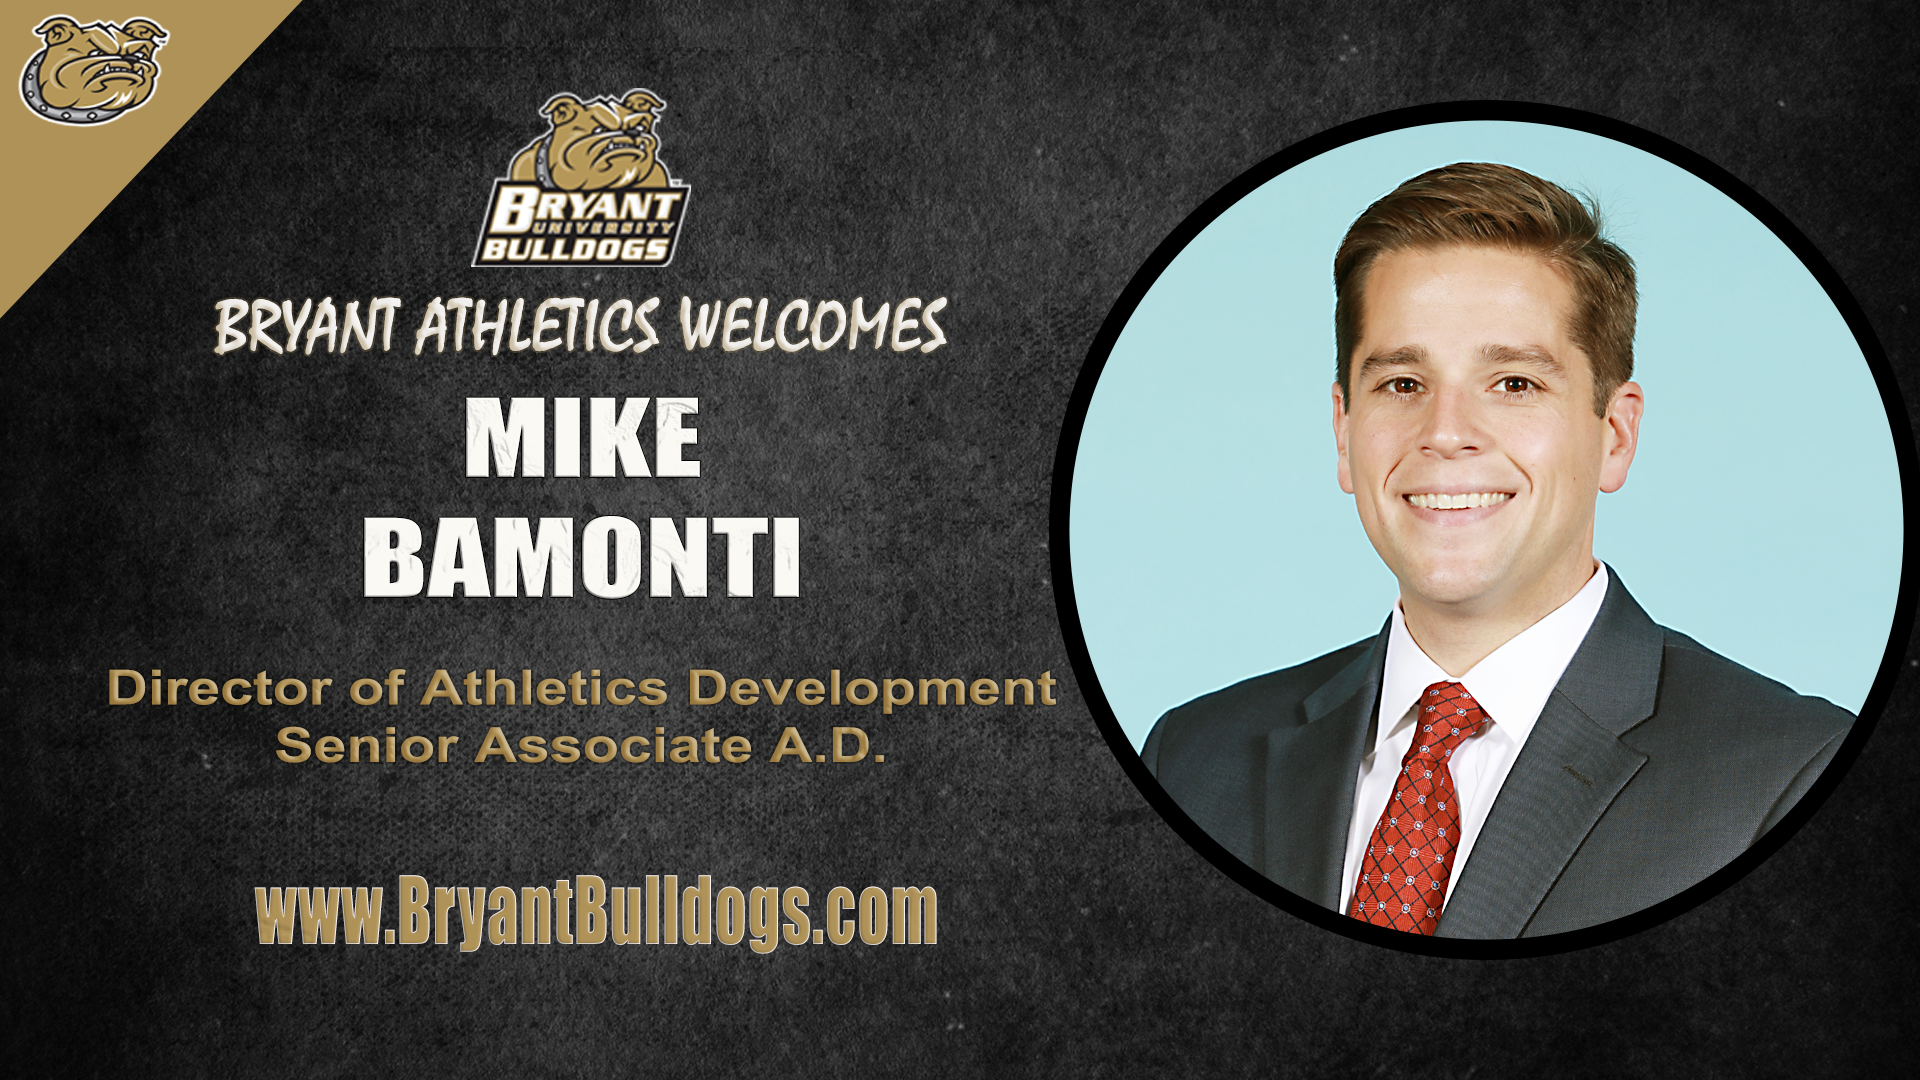 Michael Bamonti named Director of Athletics Development